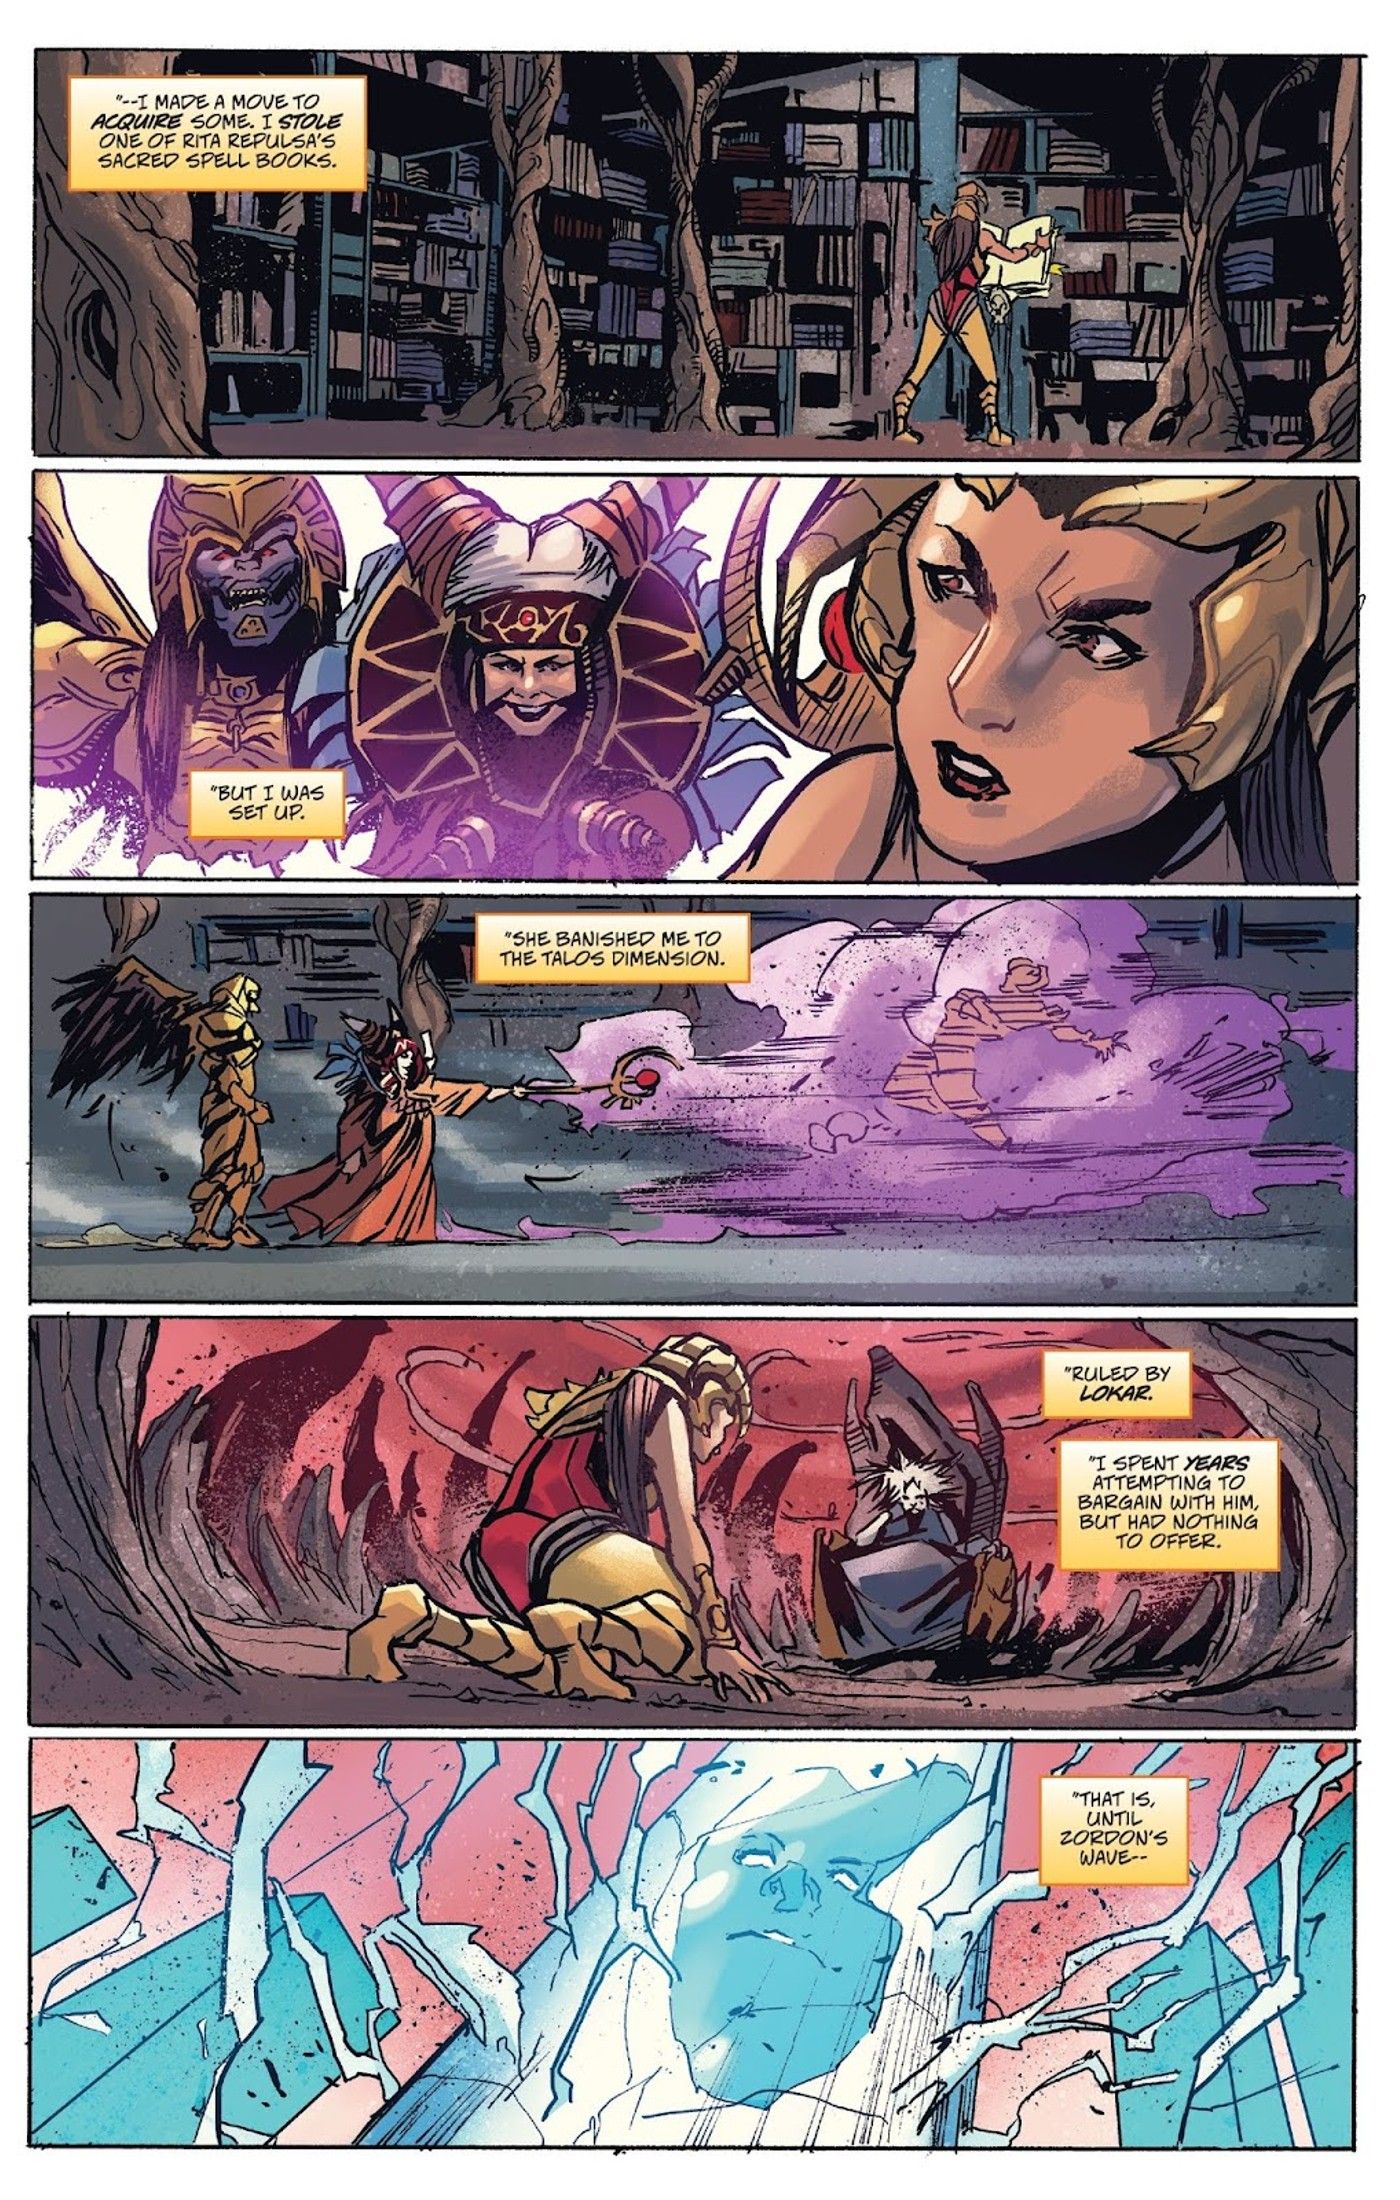 Mighty Morphin Power Rangers villains Rita Repulsa and Goldar betray Scorpina